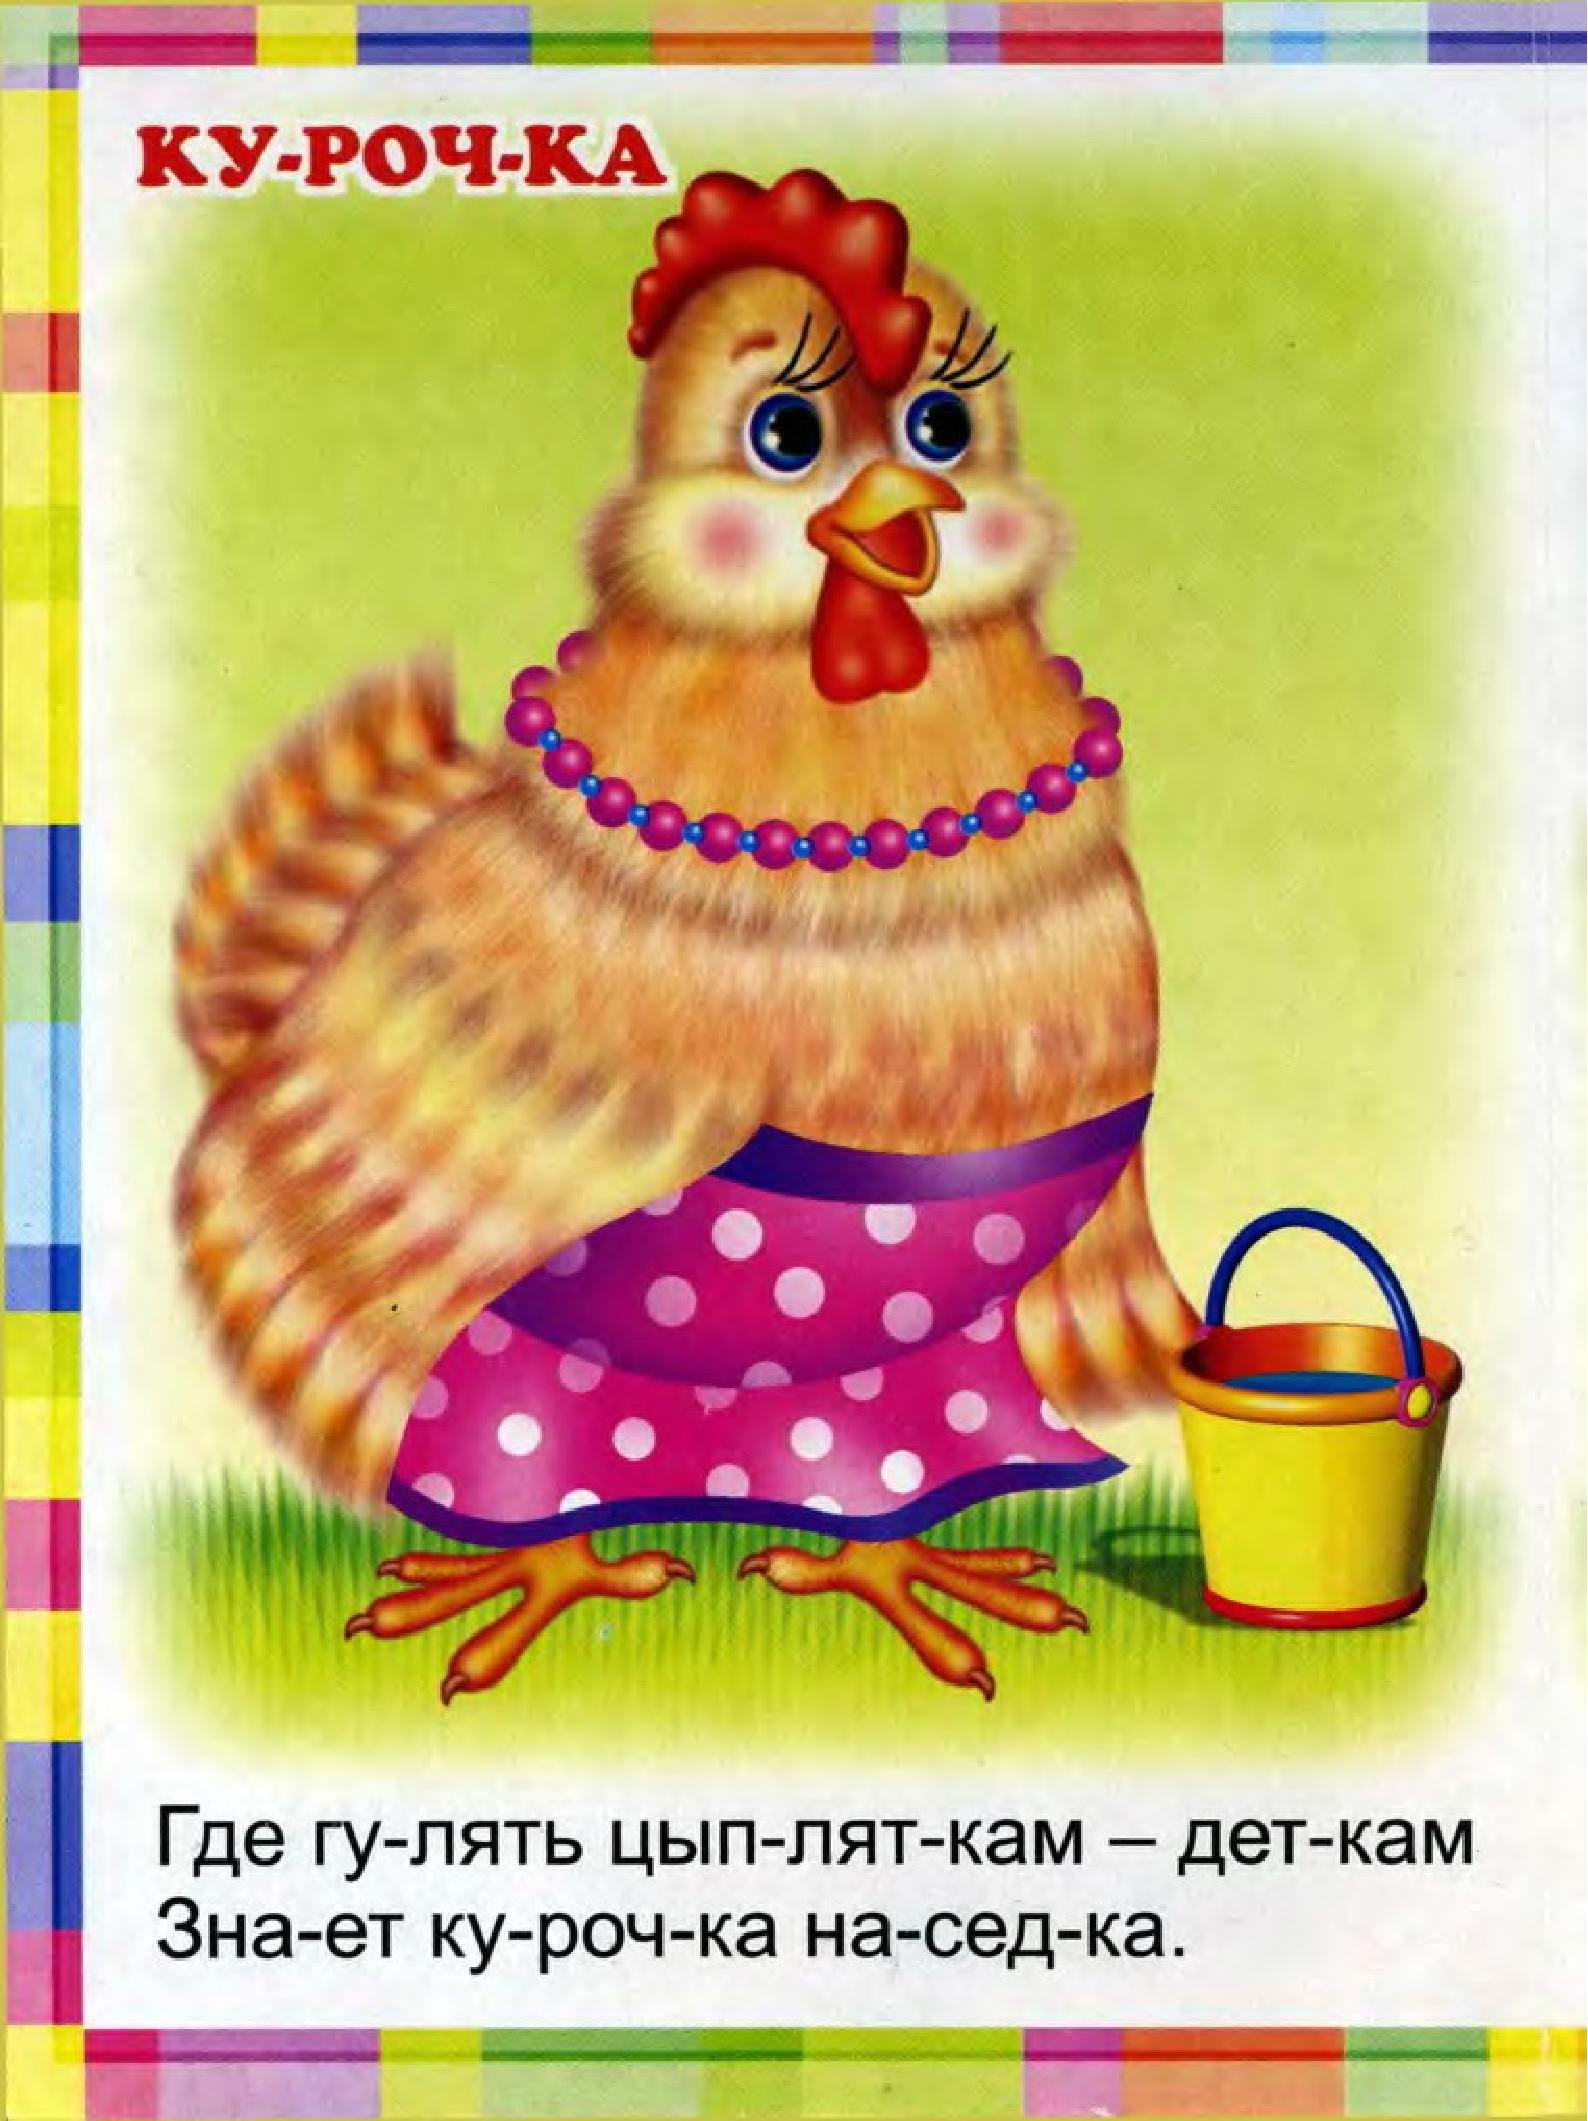 Курица из сказки. Курочка Ряба персонаж Курочка. Курица картинка для детей. Курочка картинка для детей. Курочка для детей.